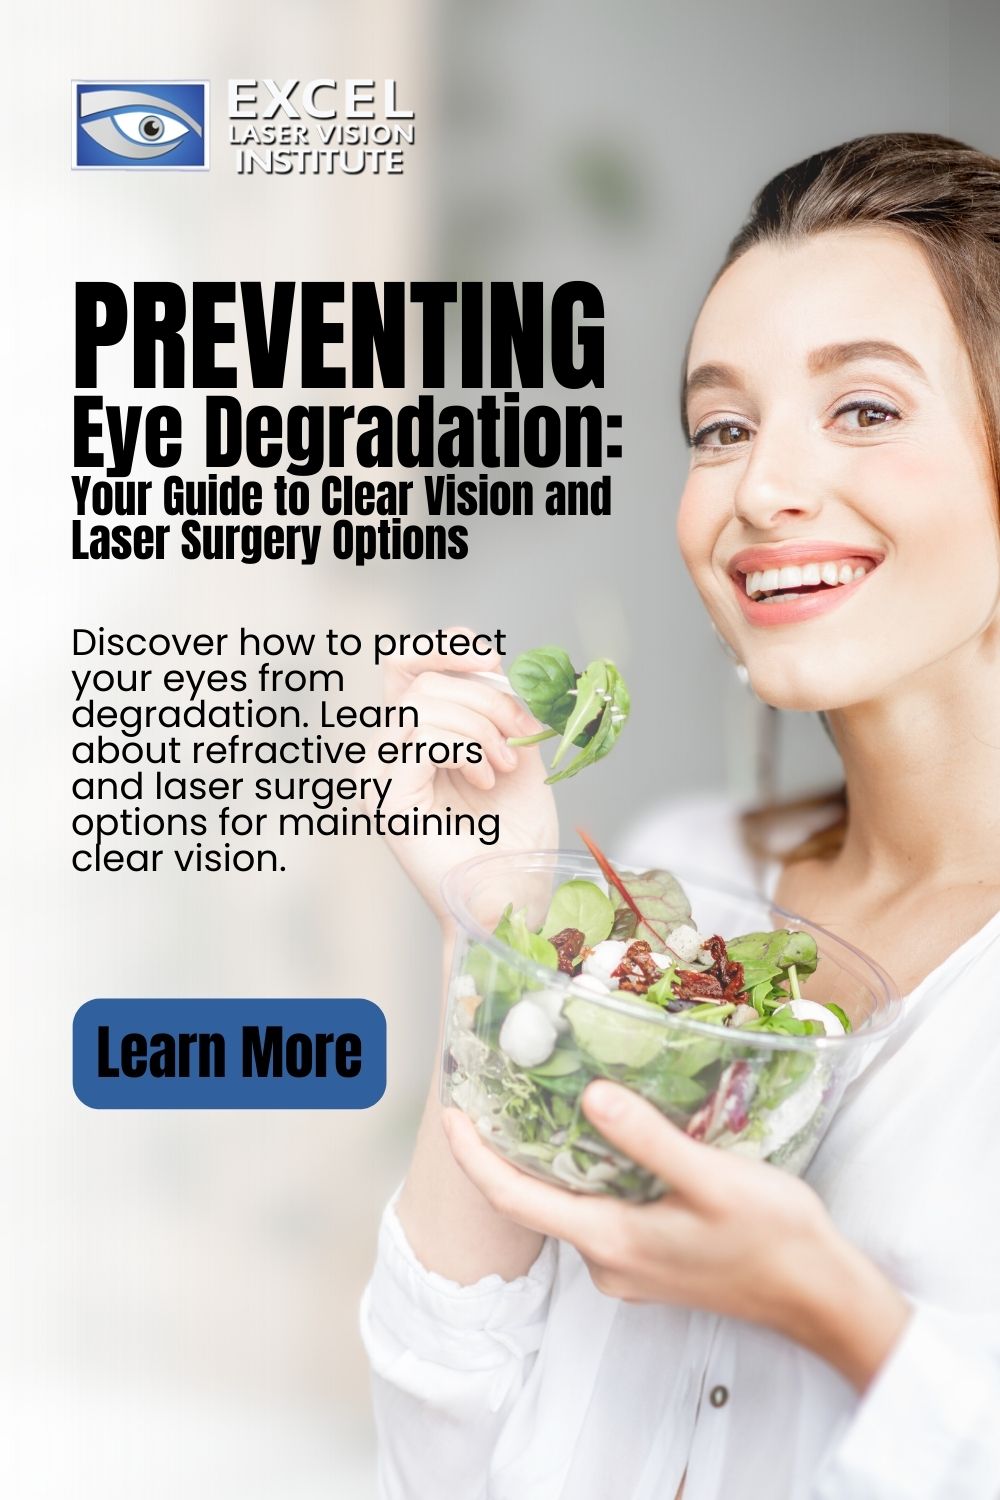 eye-degradation-and-laser-surgery-options-pinterest